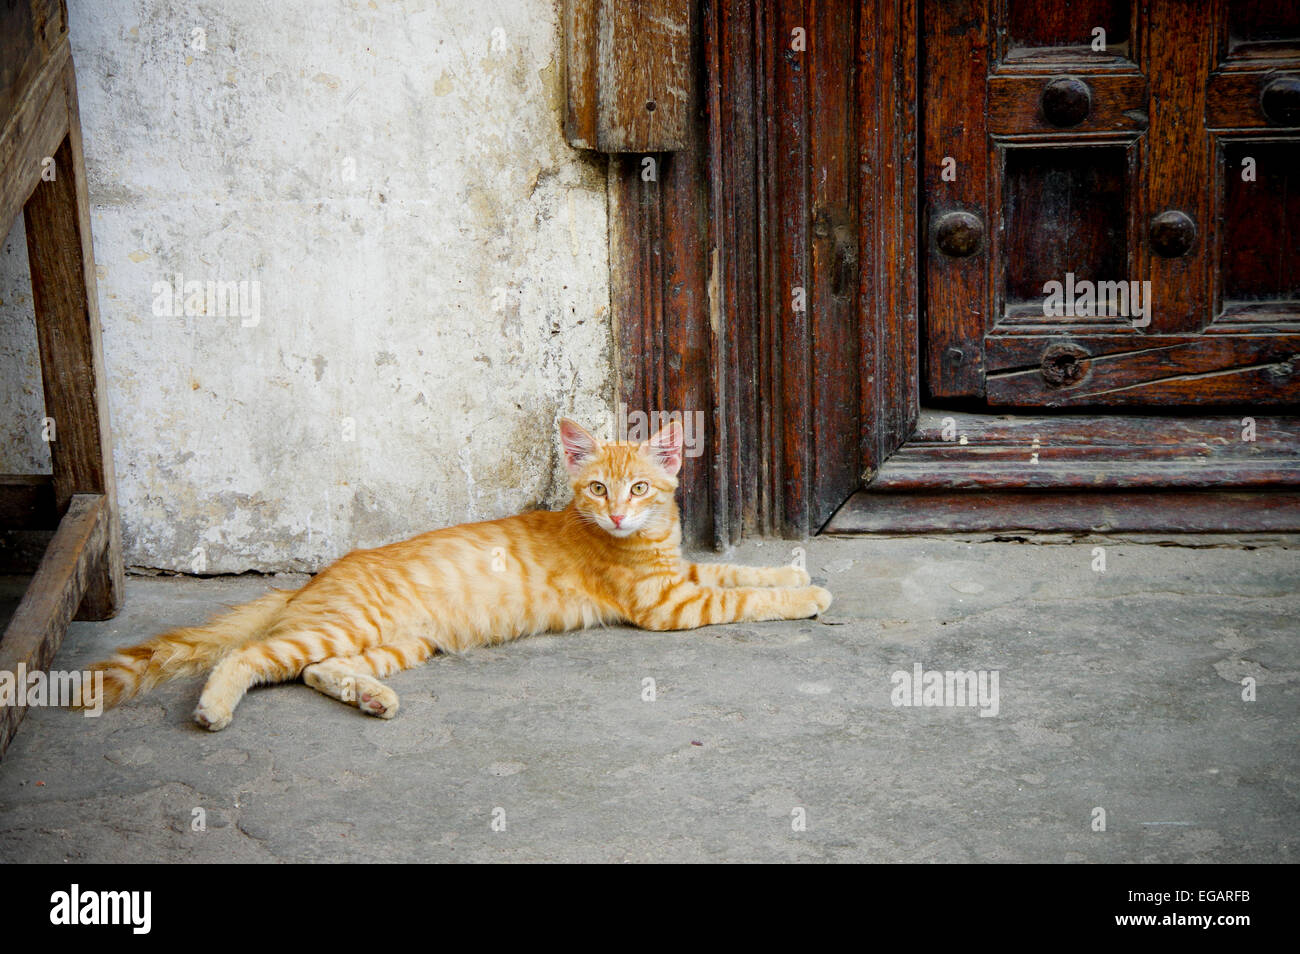 Cat guarding a typical ornate door in Stone Town, Zanzibar Stock Photo